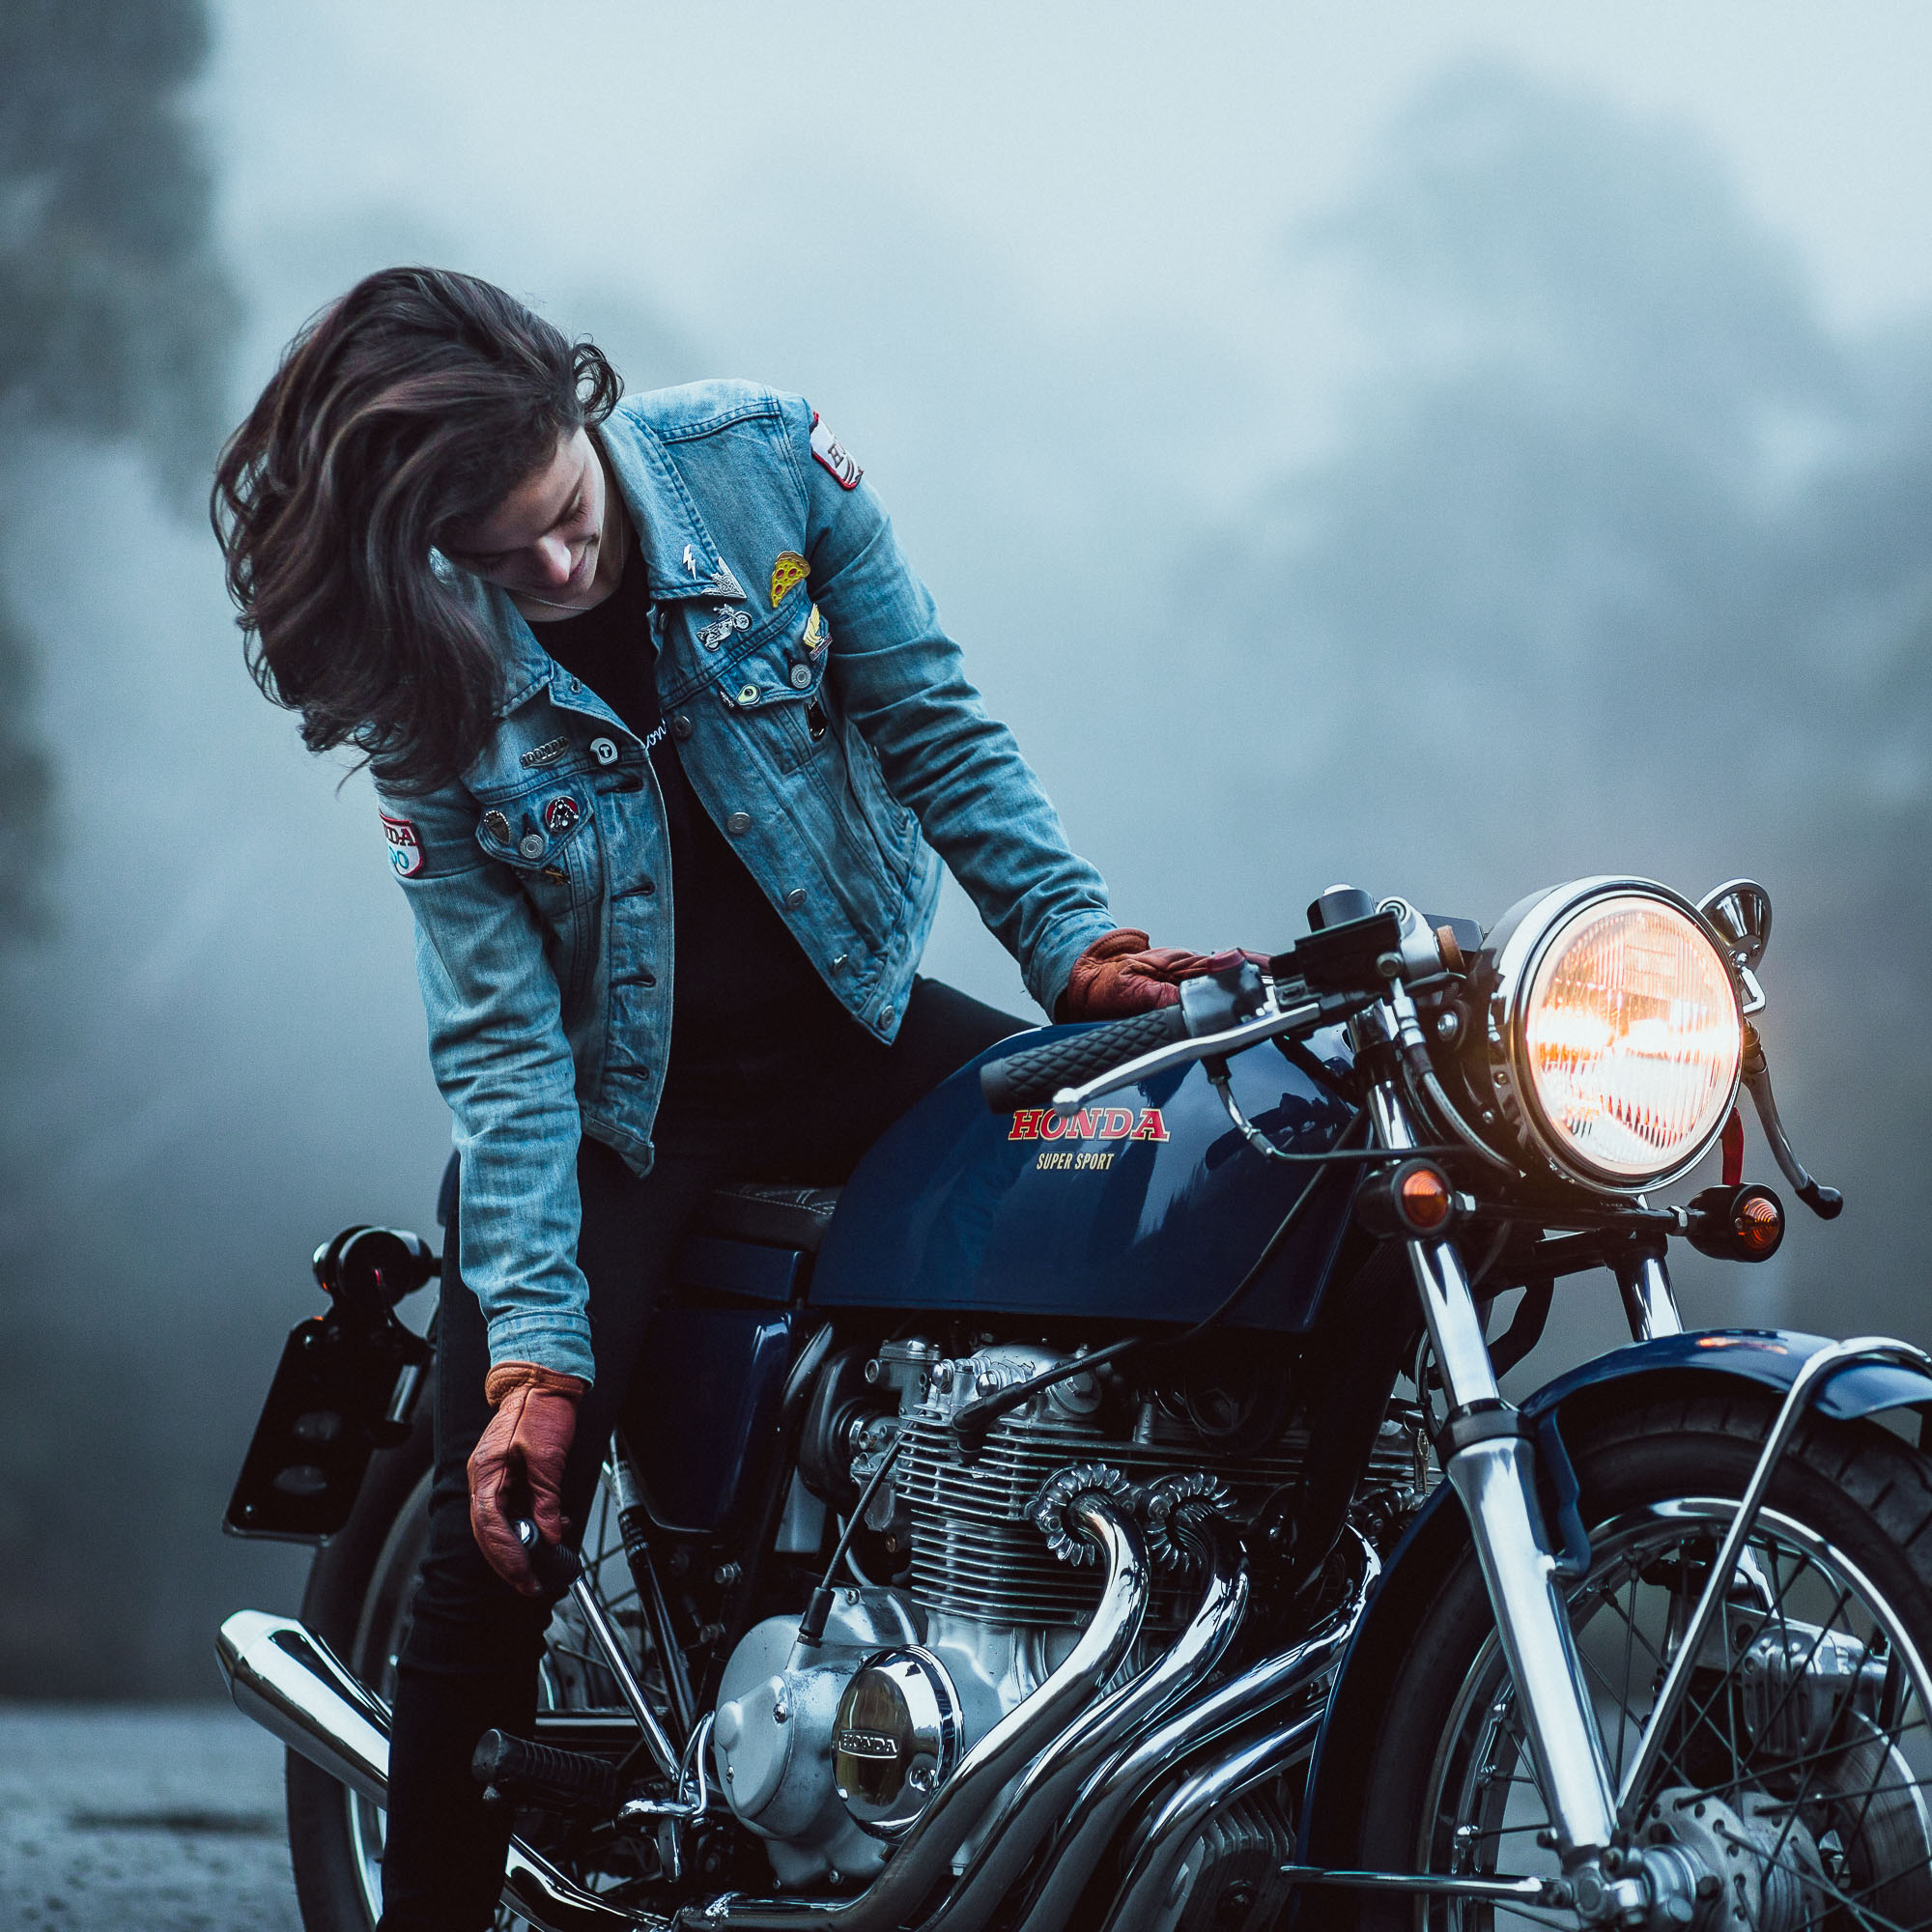  Katie Abdilla in Tasmania seated on her Honda CB400 Four Motorcycle